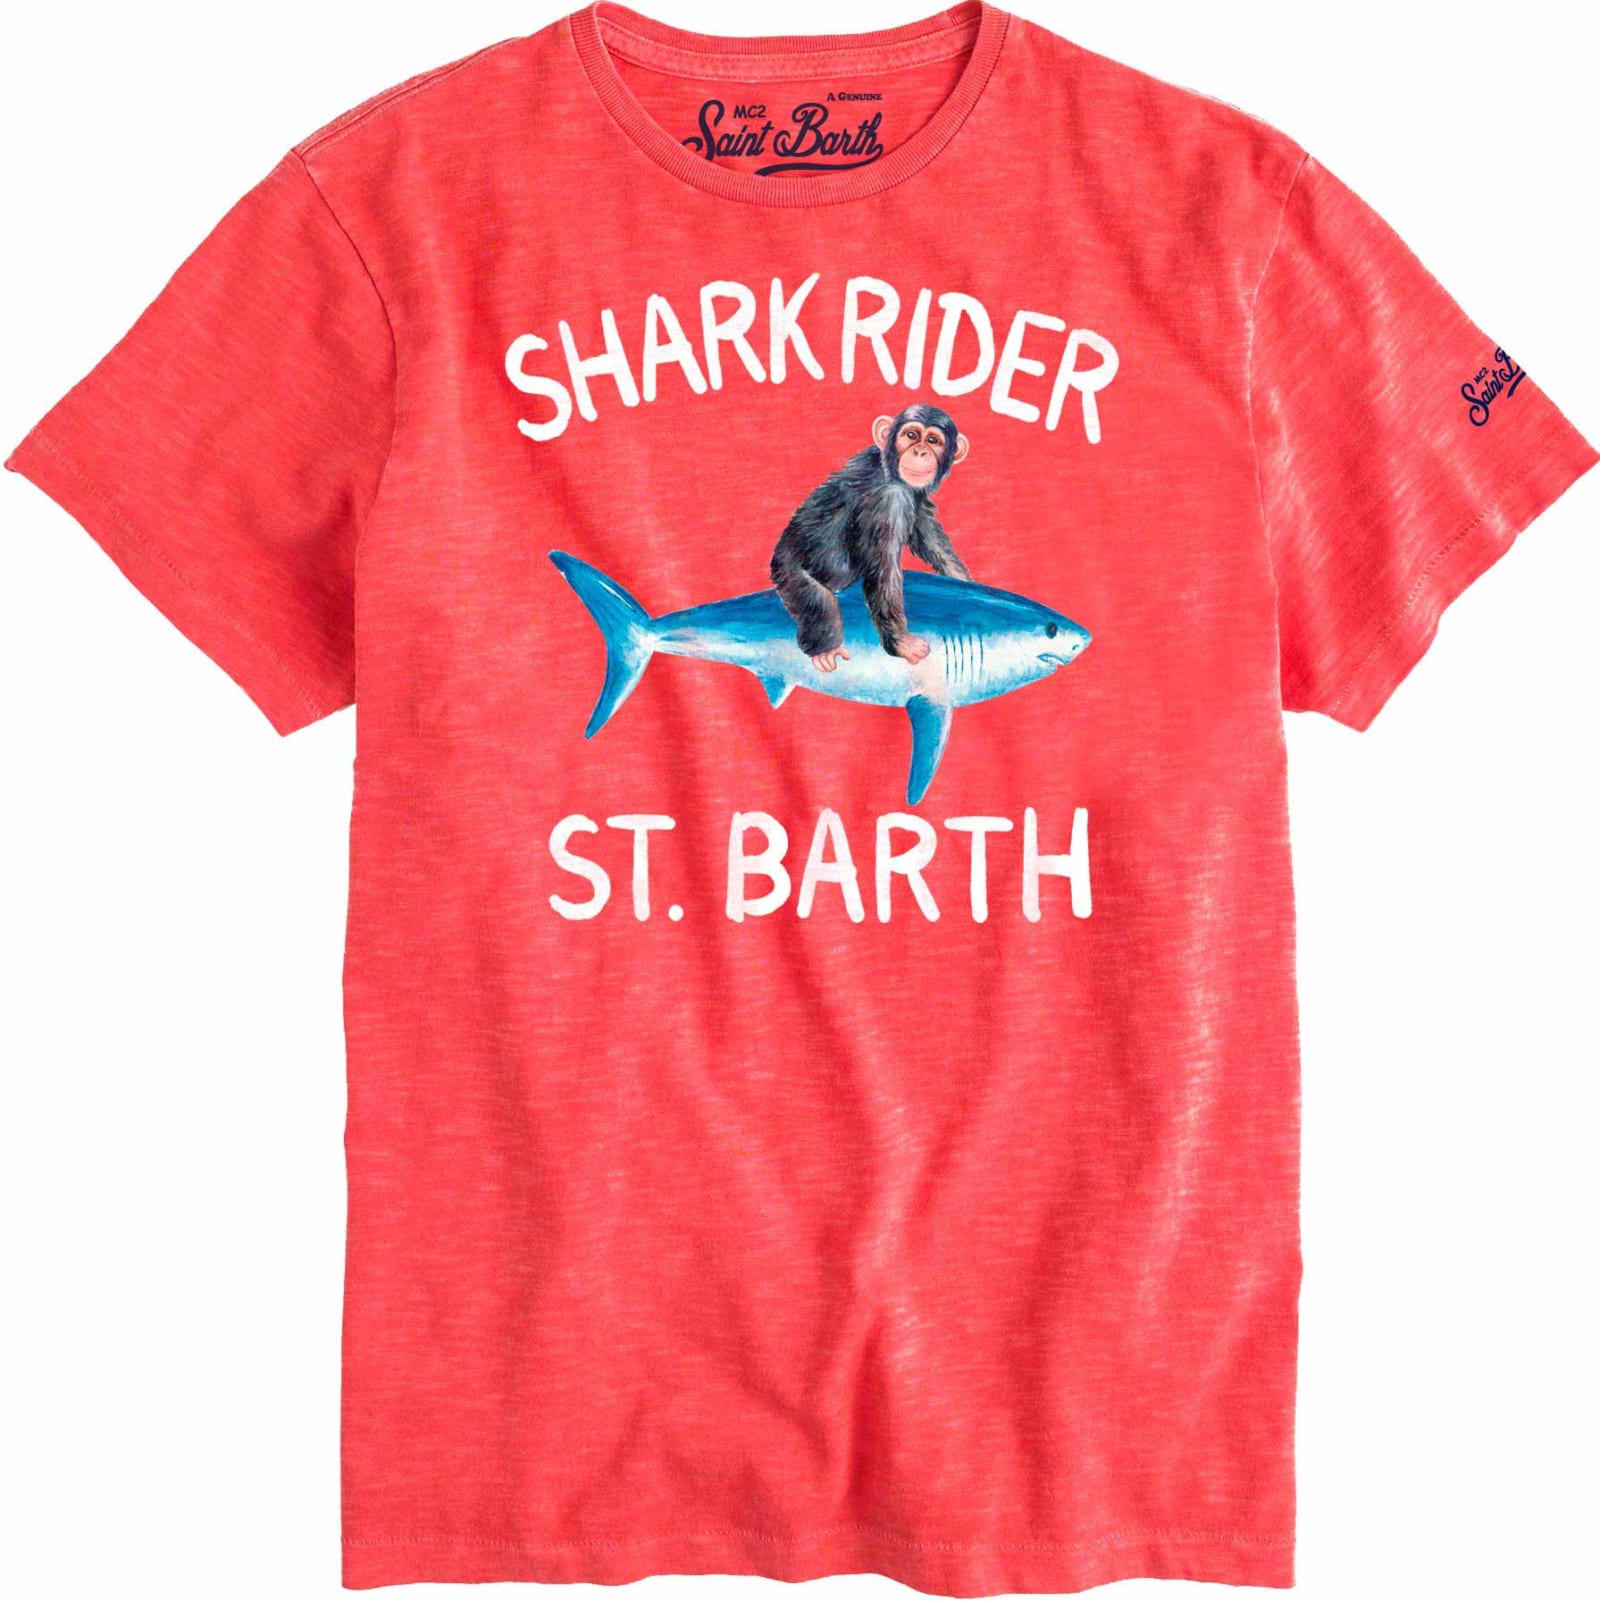 MC2 Saint Barth Red Boys T-shirt Shark Rider St Barth Print